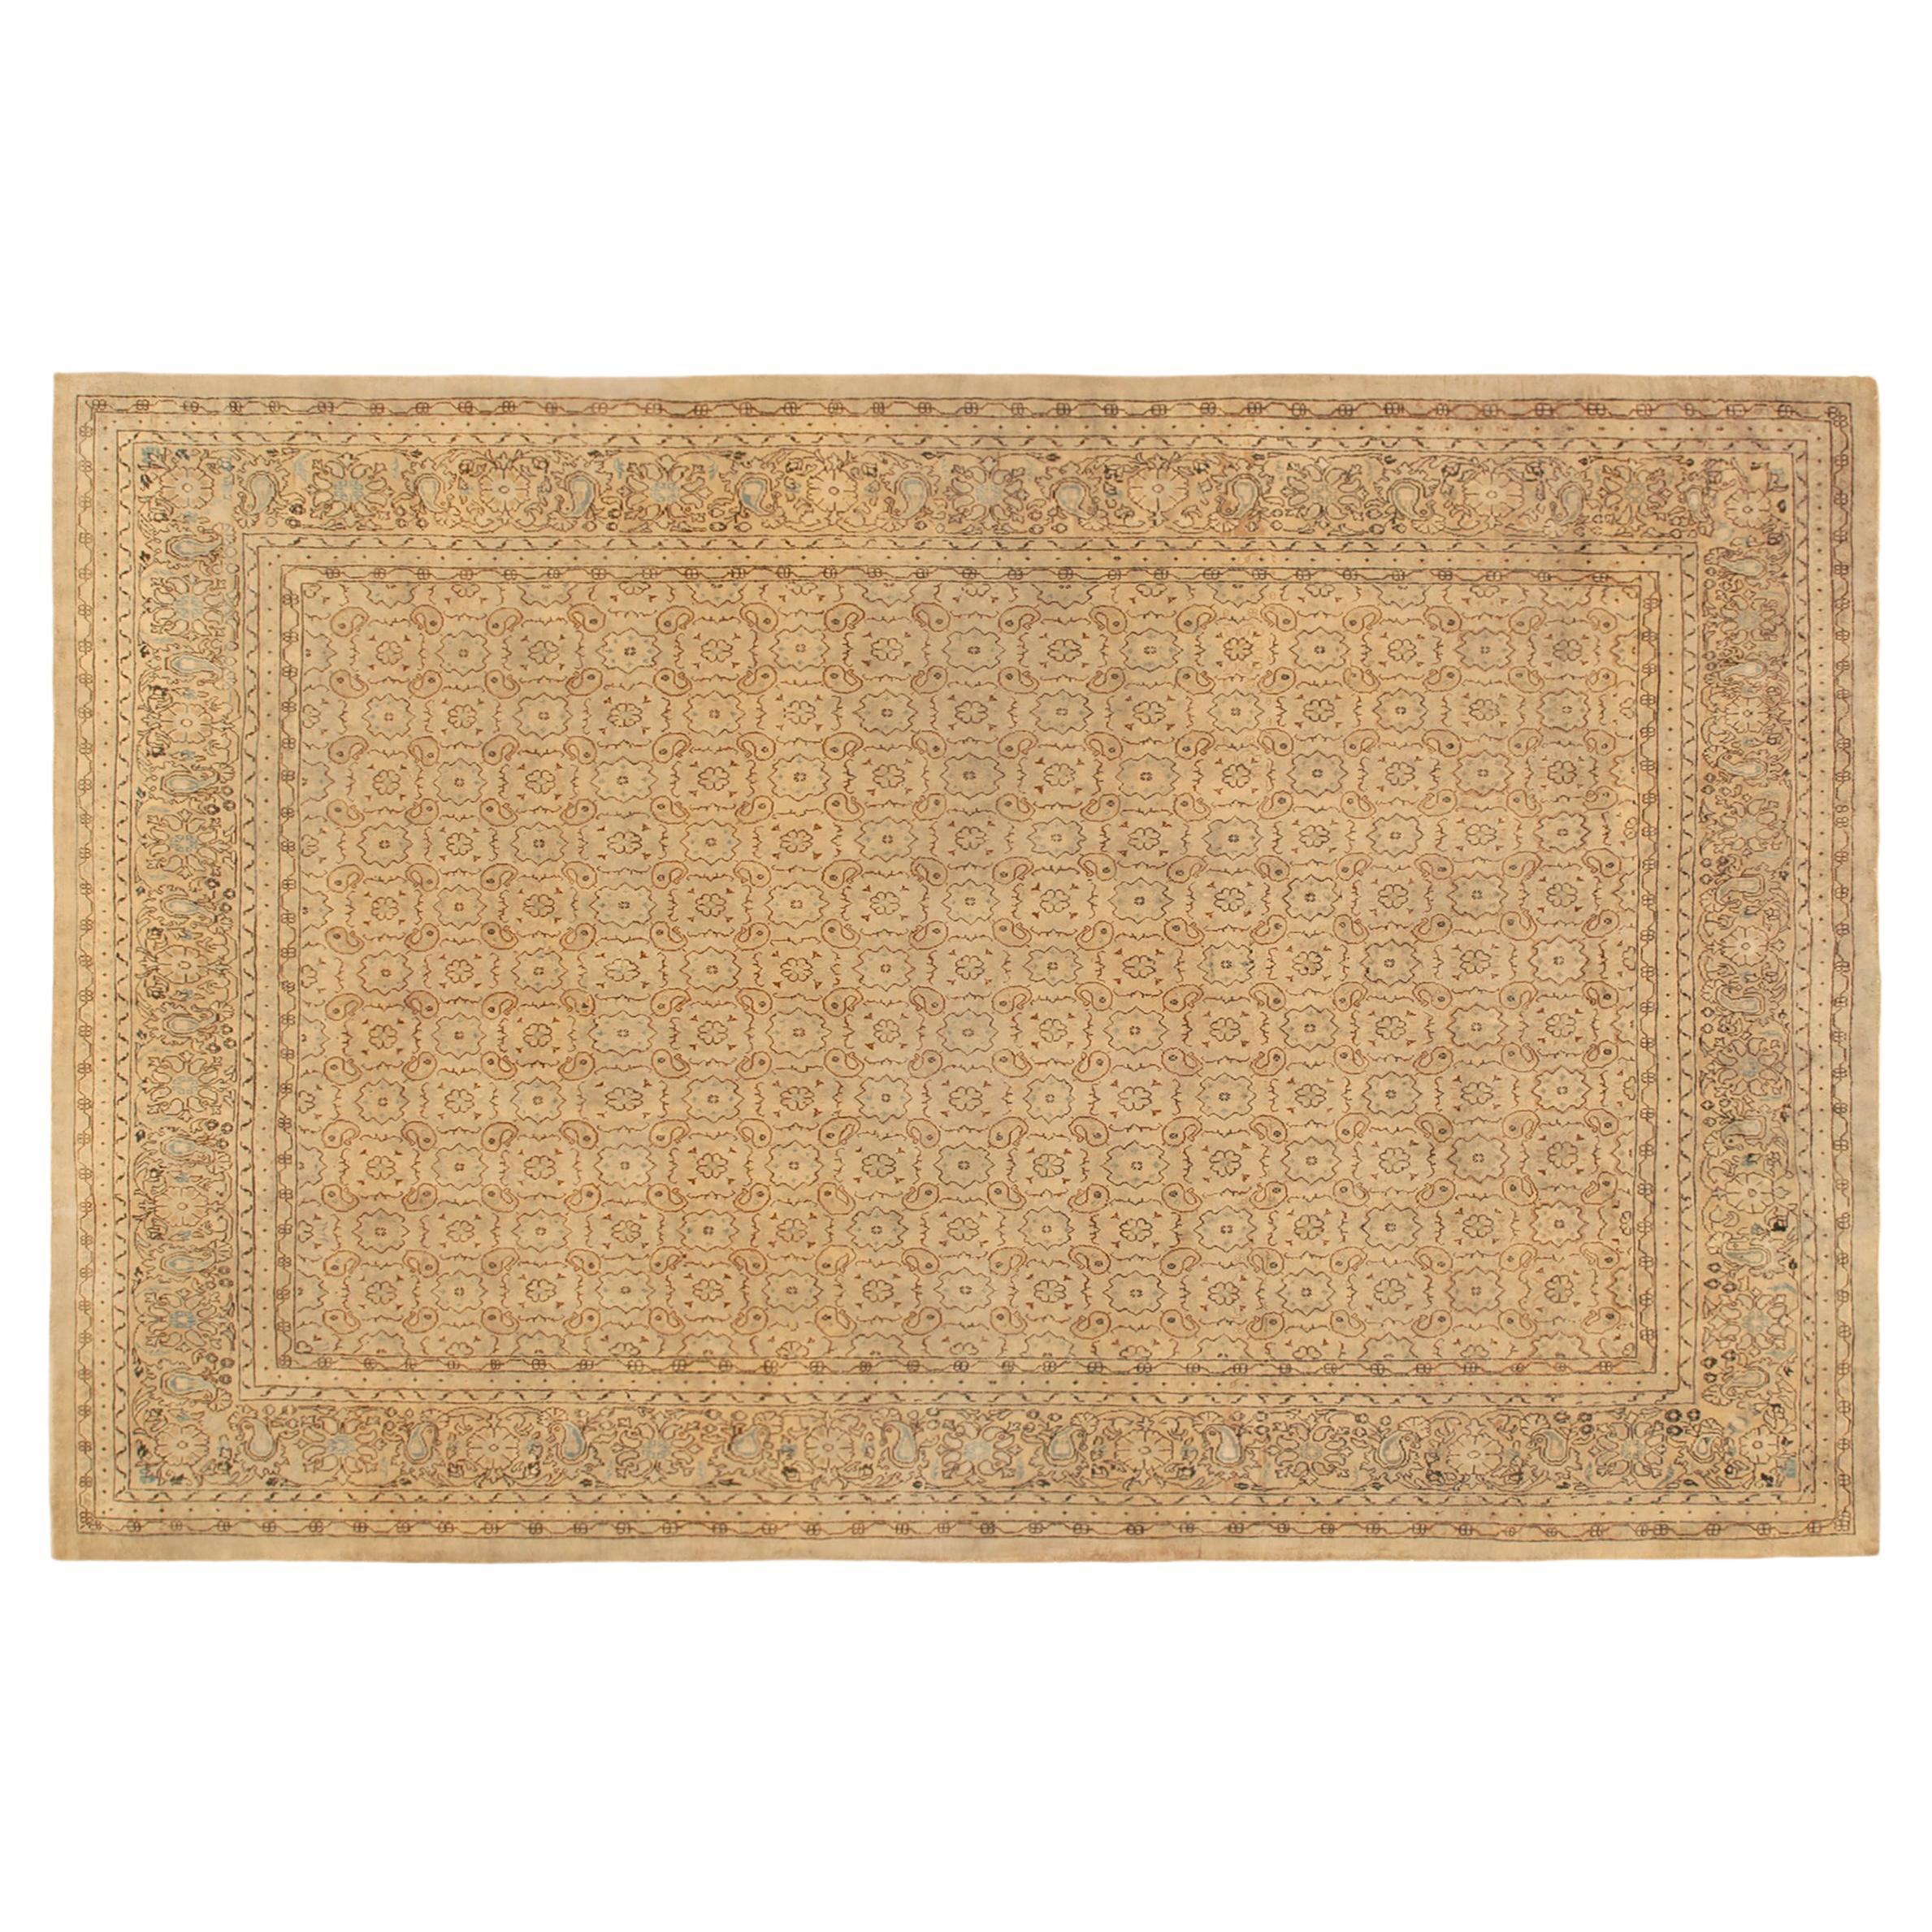 Antique Turkish Sivas Oriental Carpet, in Room Size w/ Rosettes For Sale